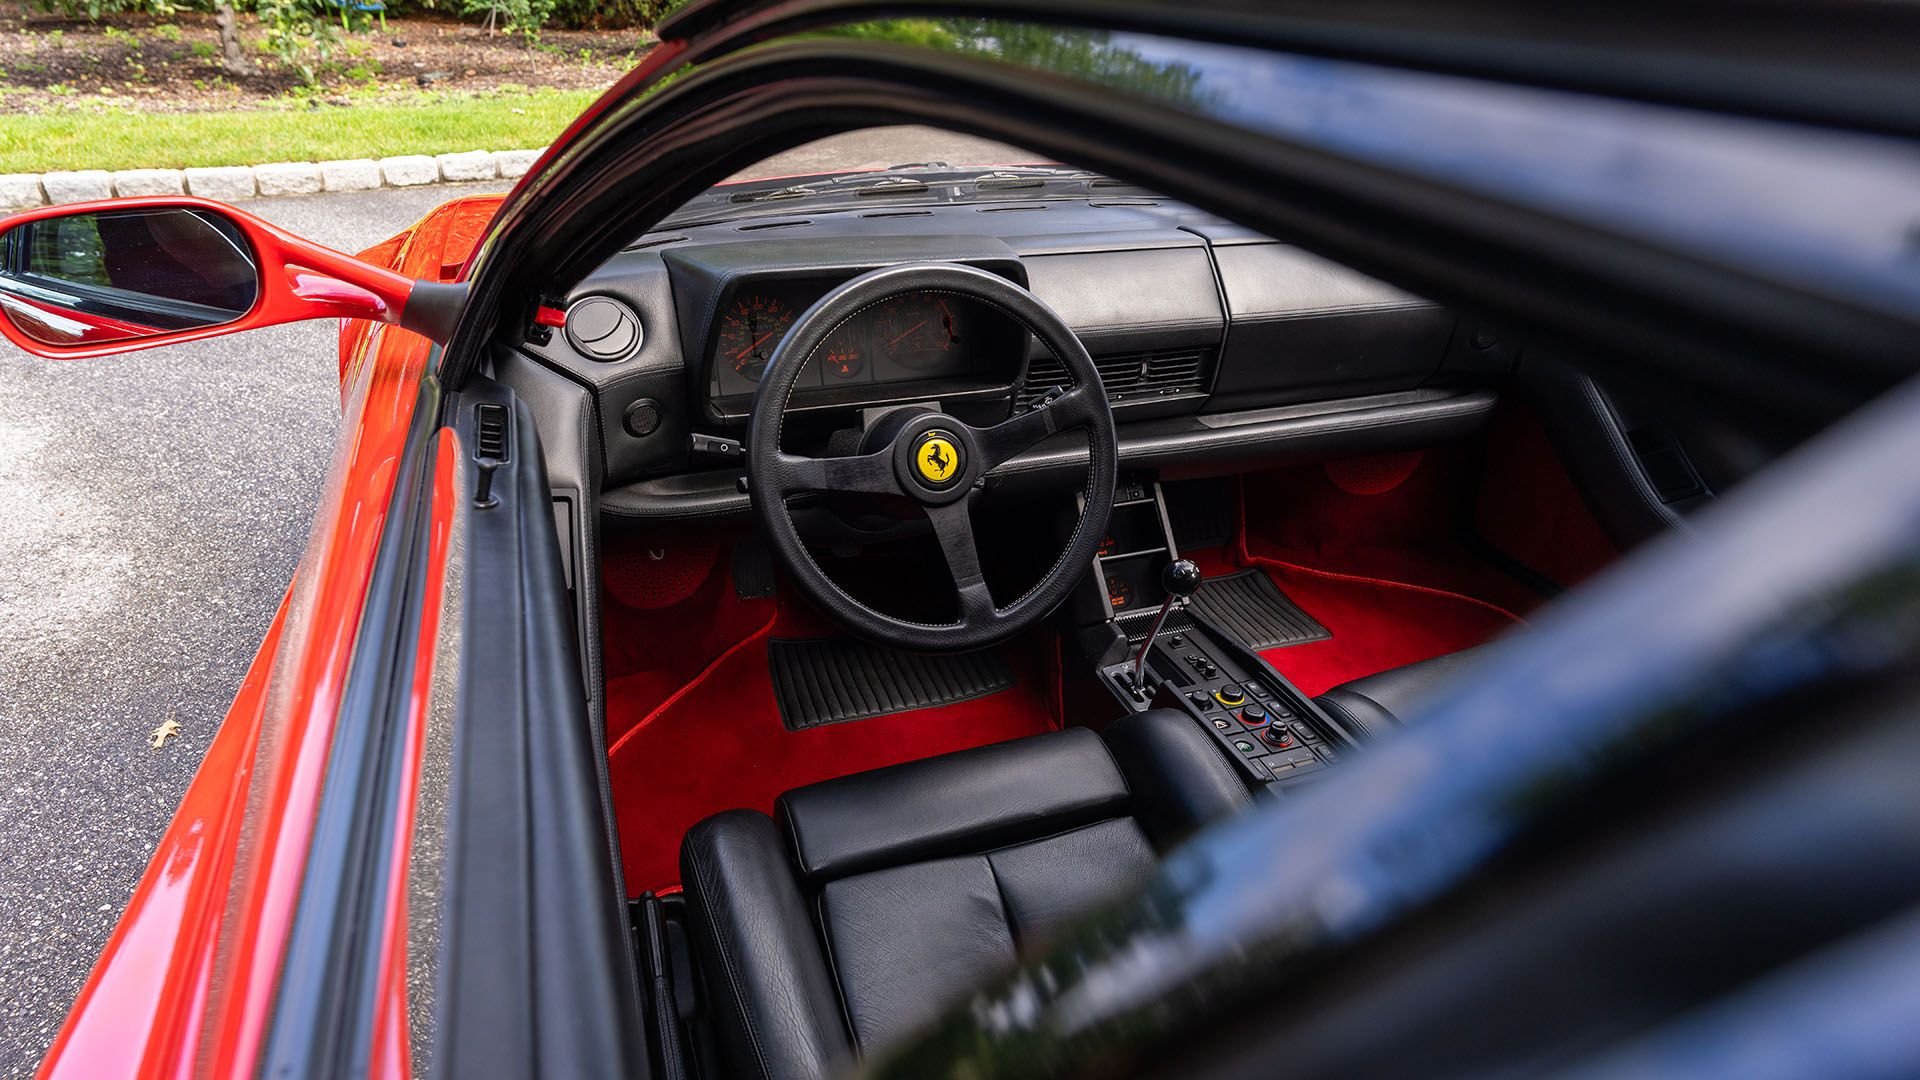 For Sale 1987 Ferrari Testarossa